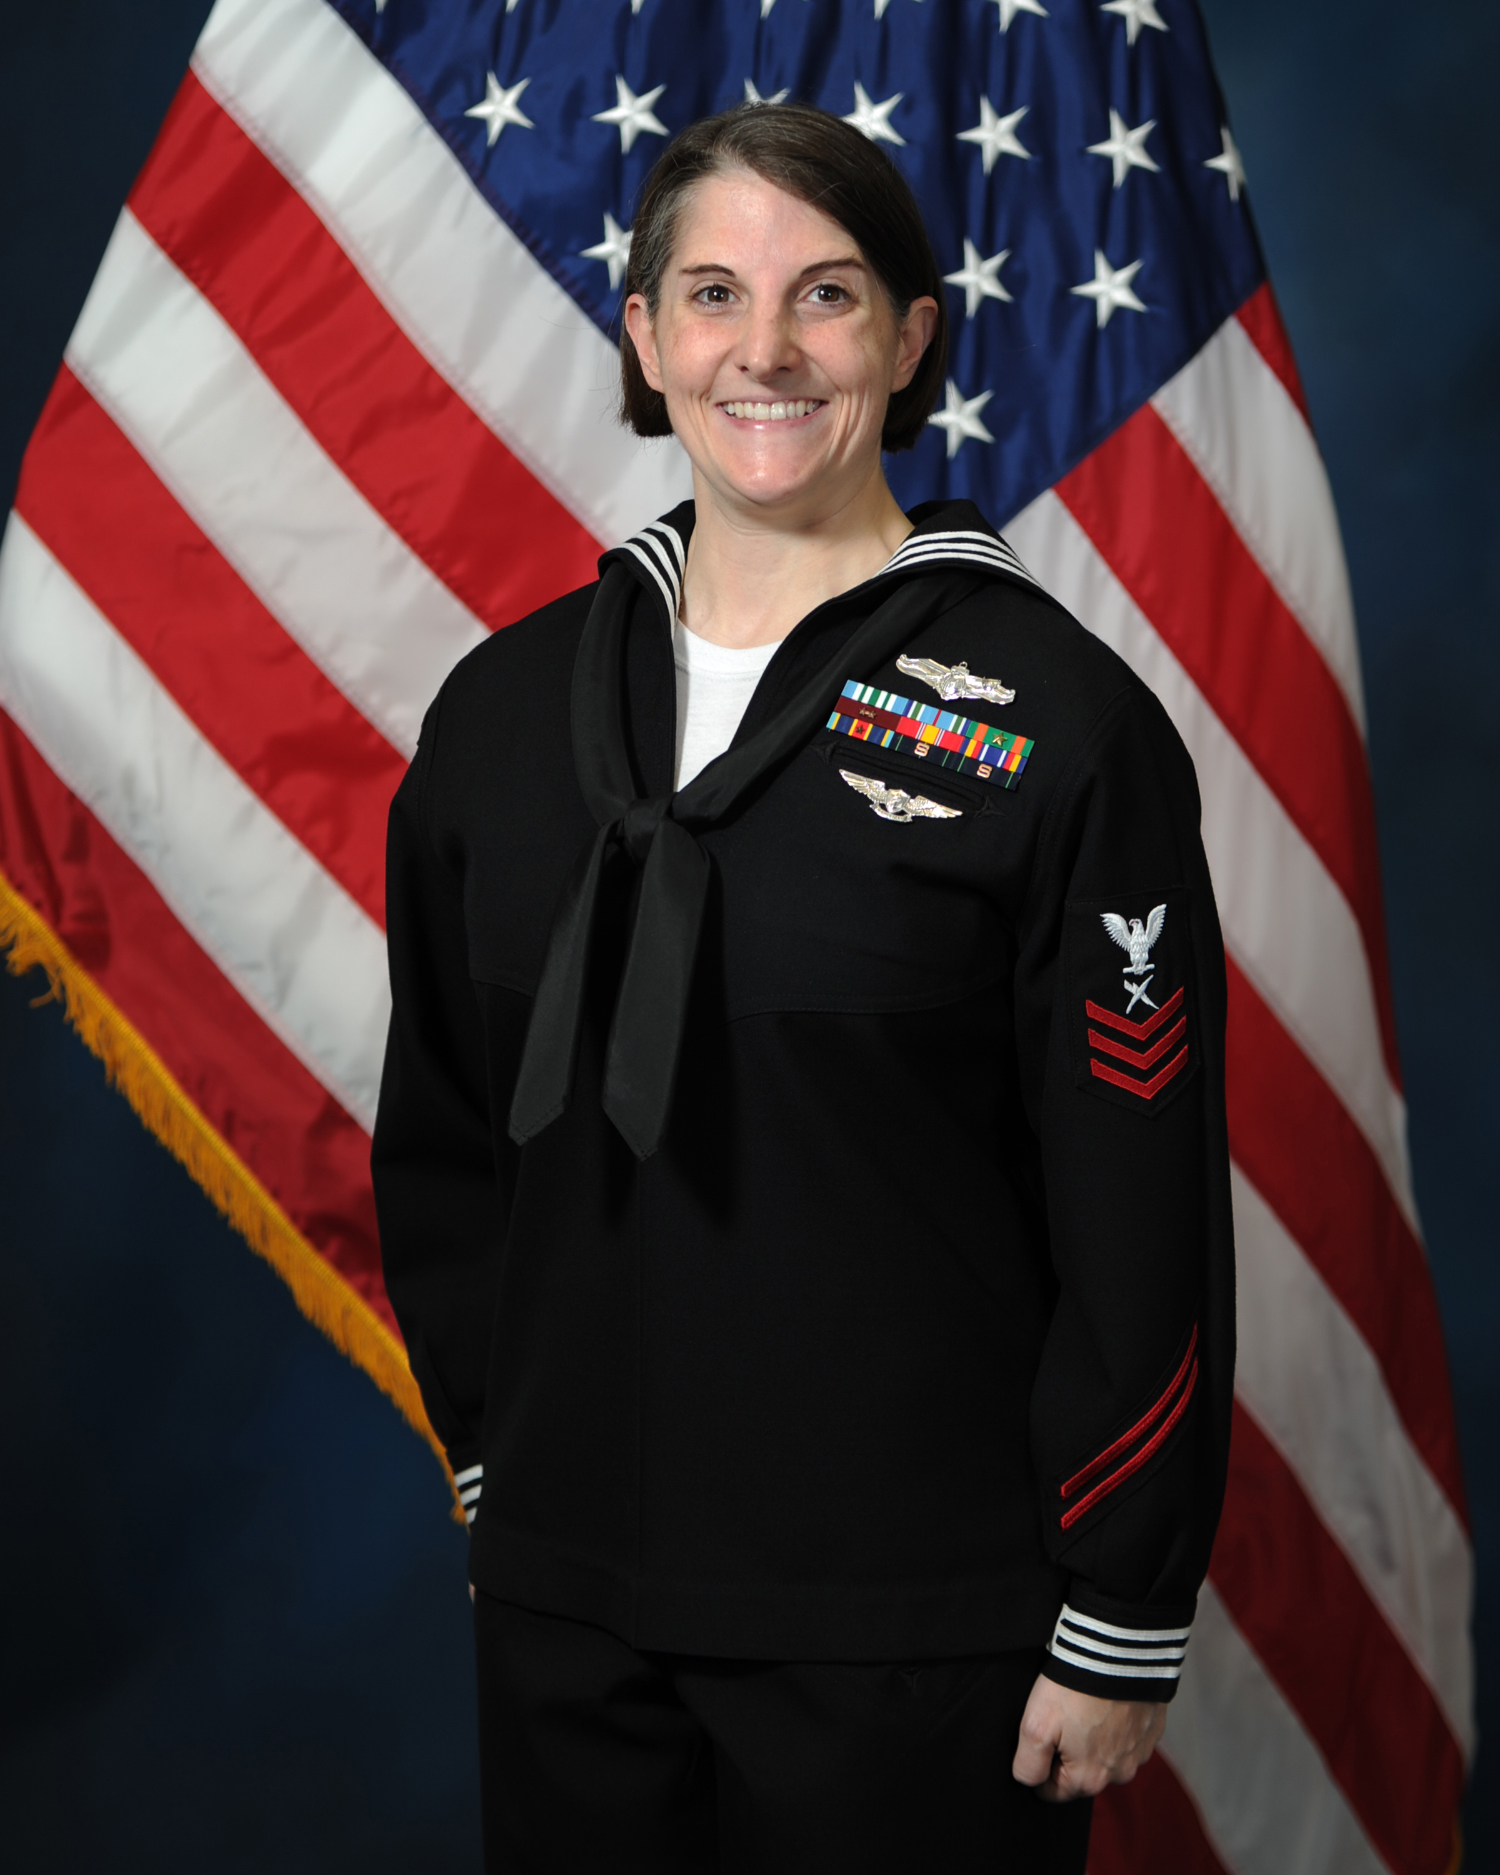  Petty Officer 1st Class Samantha Teliczan